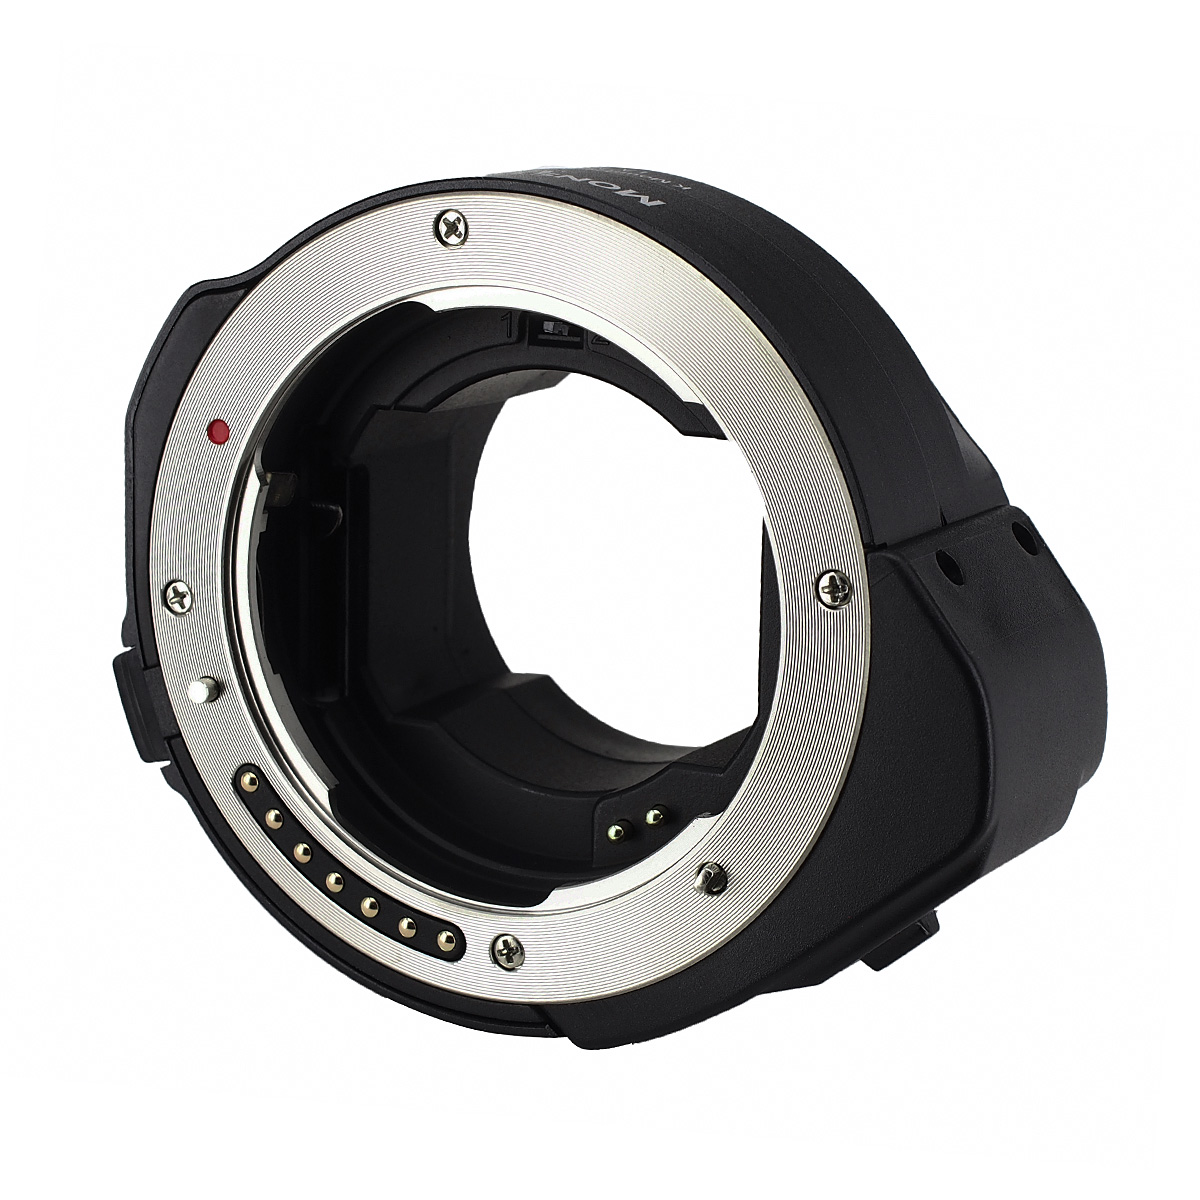 MonsterAdapter レンズマウントアダプター  LA-KE1 (ペンタックスKマウントAFレンズ → ソニーEマウント変換) 電子マウントアダプター